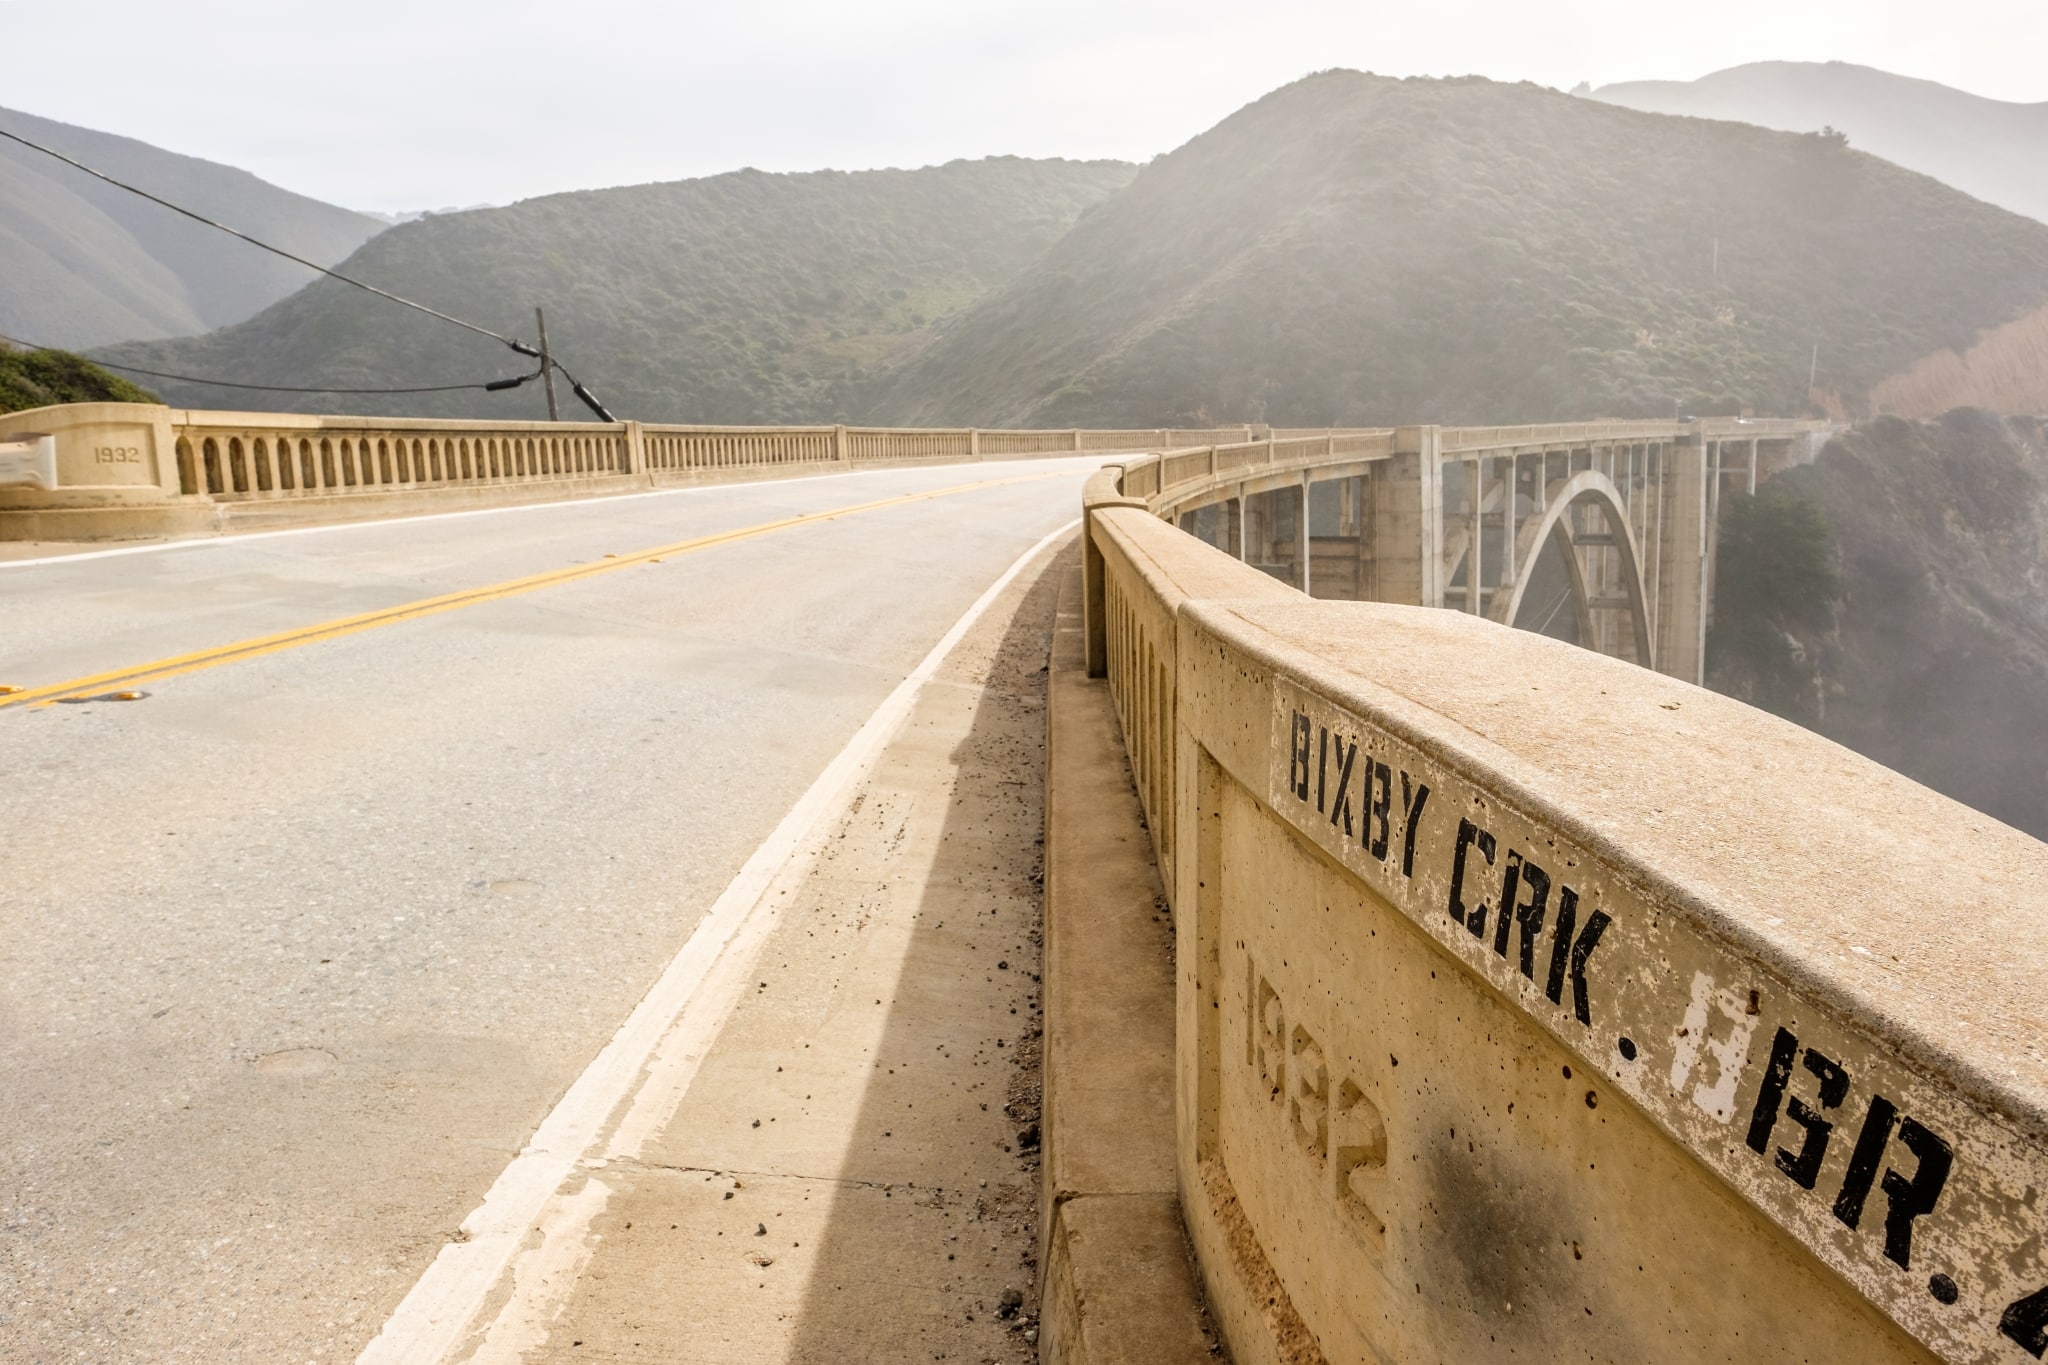 bixby creek bridge on highway 1 california PQ2FTJK